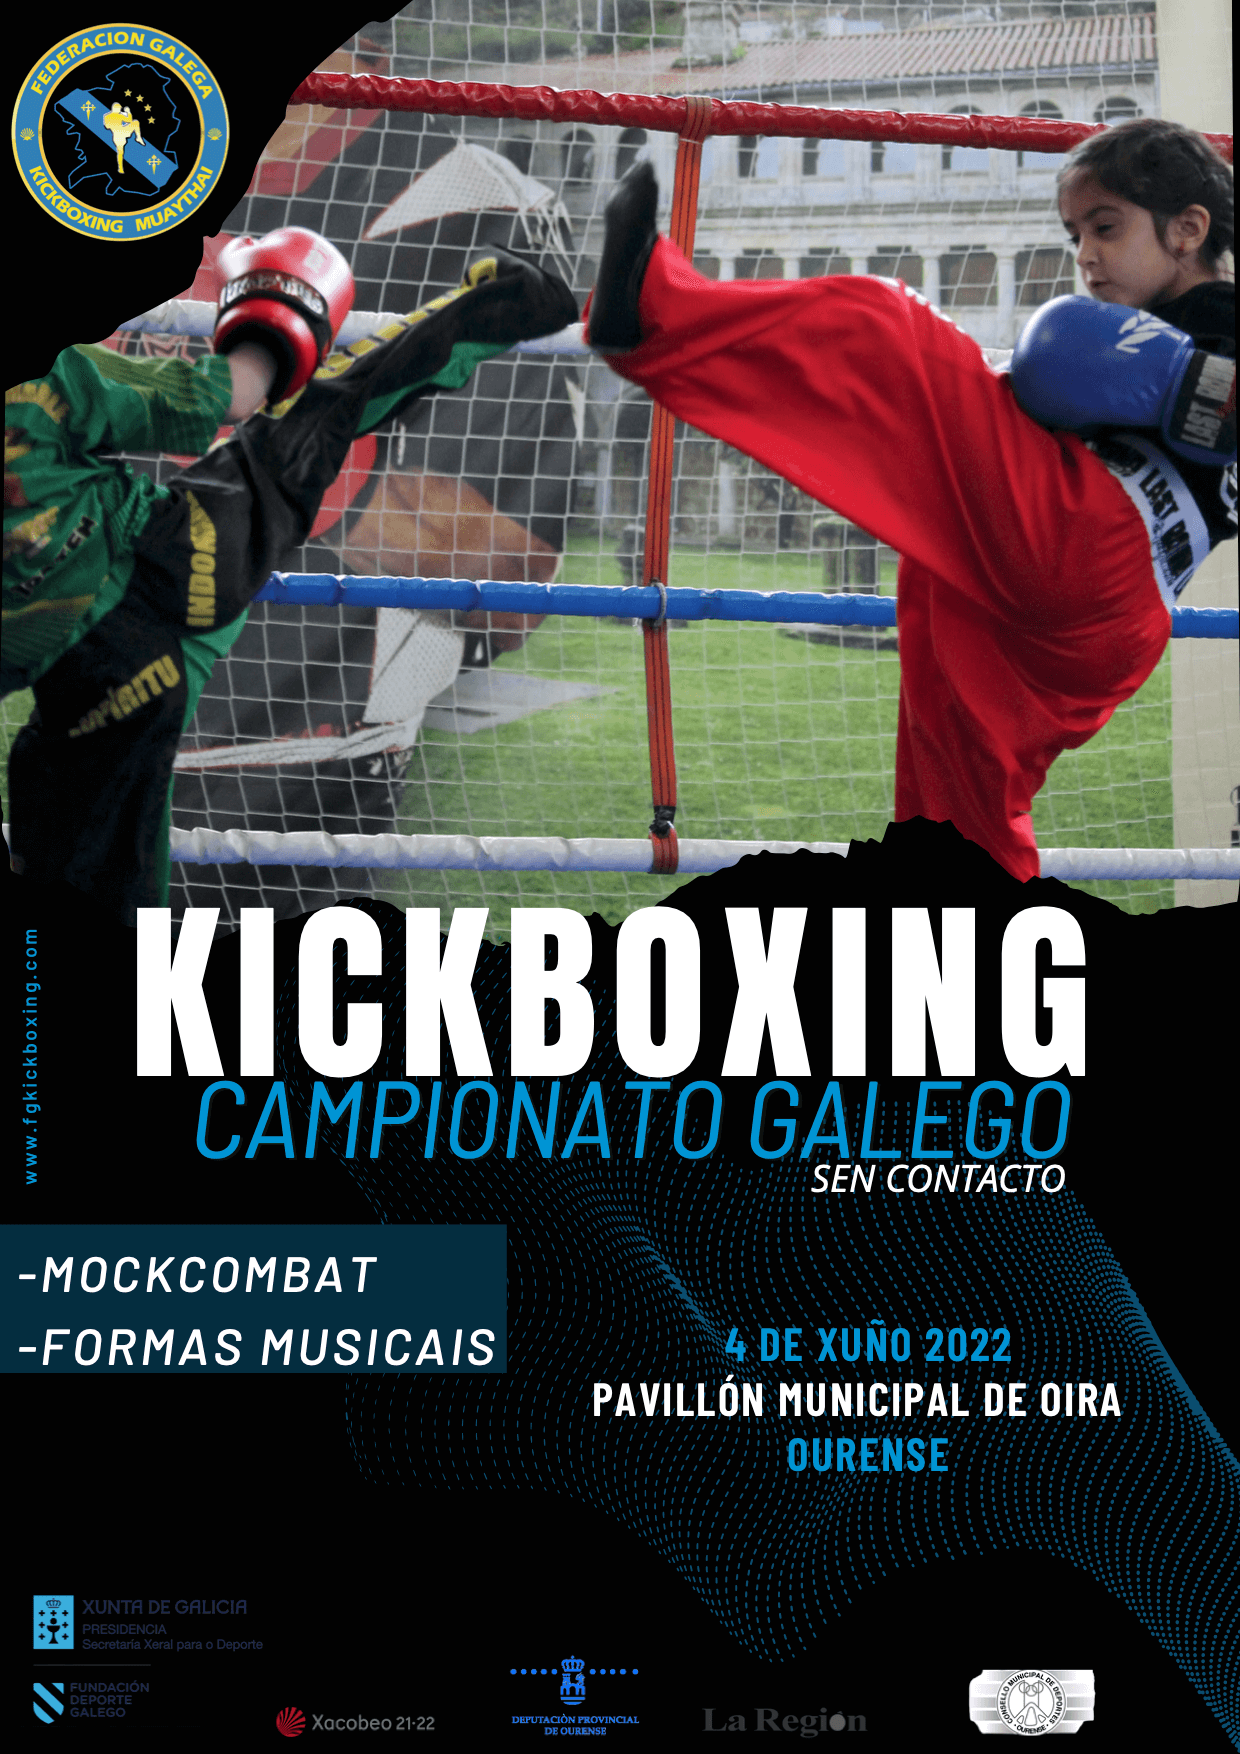 En este momento estás viendo Torneo de Kickboxing Cidade de Ourense